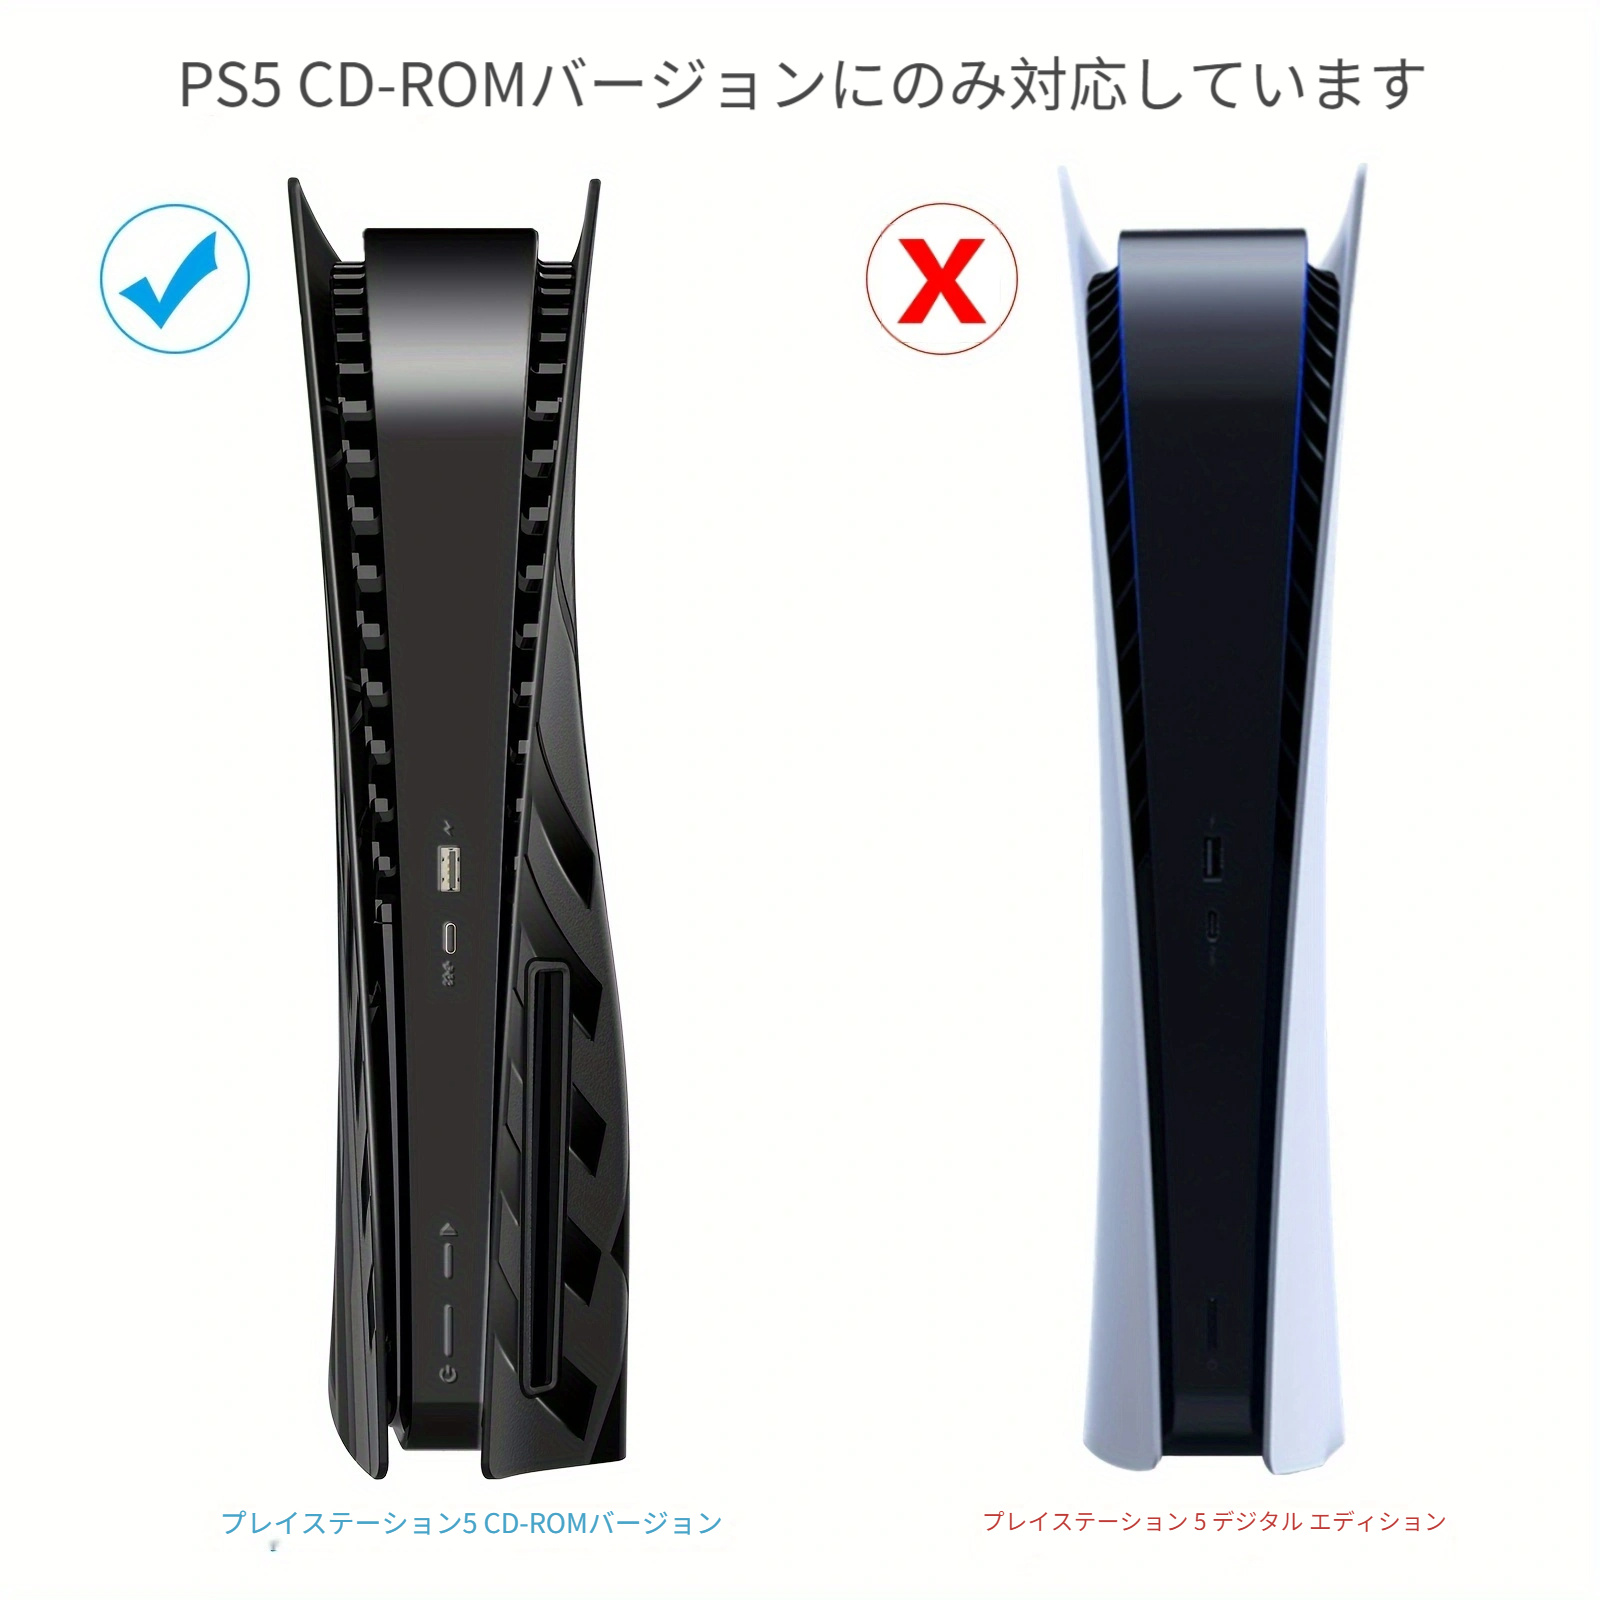 PS5 アクセサリー用プレート、PS5 コンソール用ハード耐衝撃カバー ...